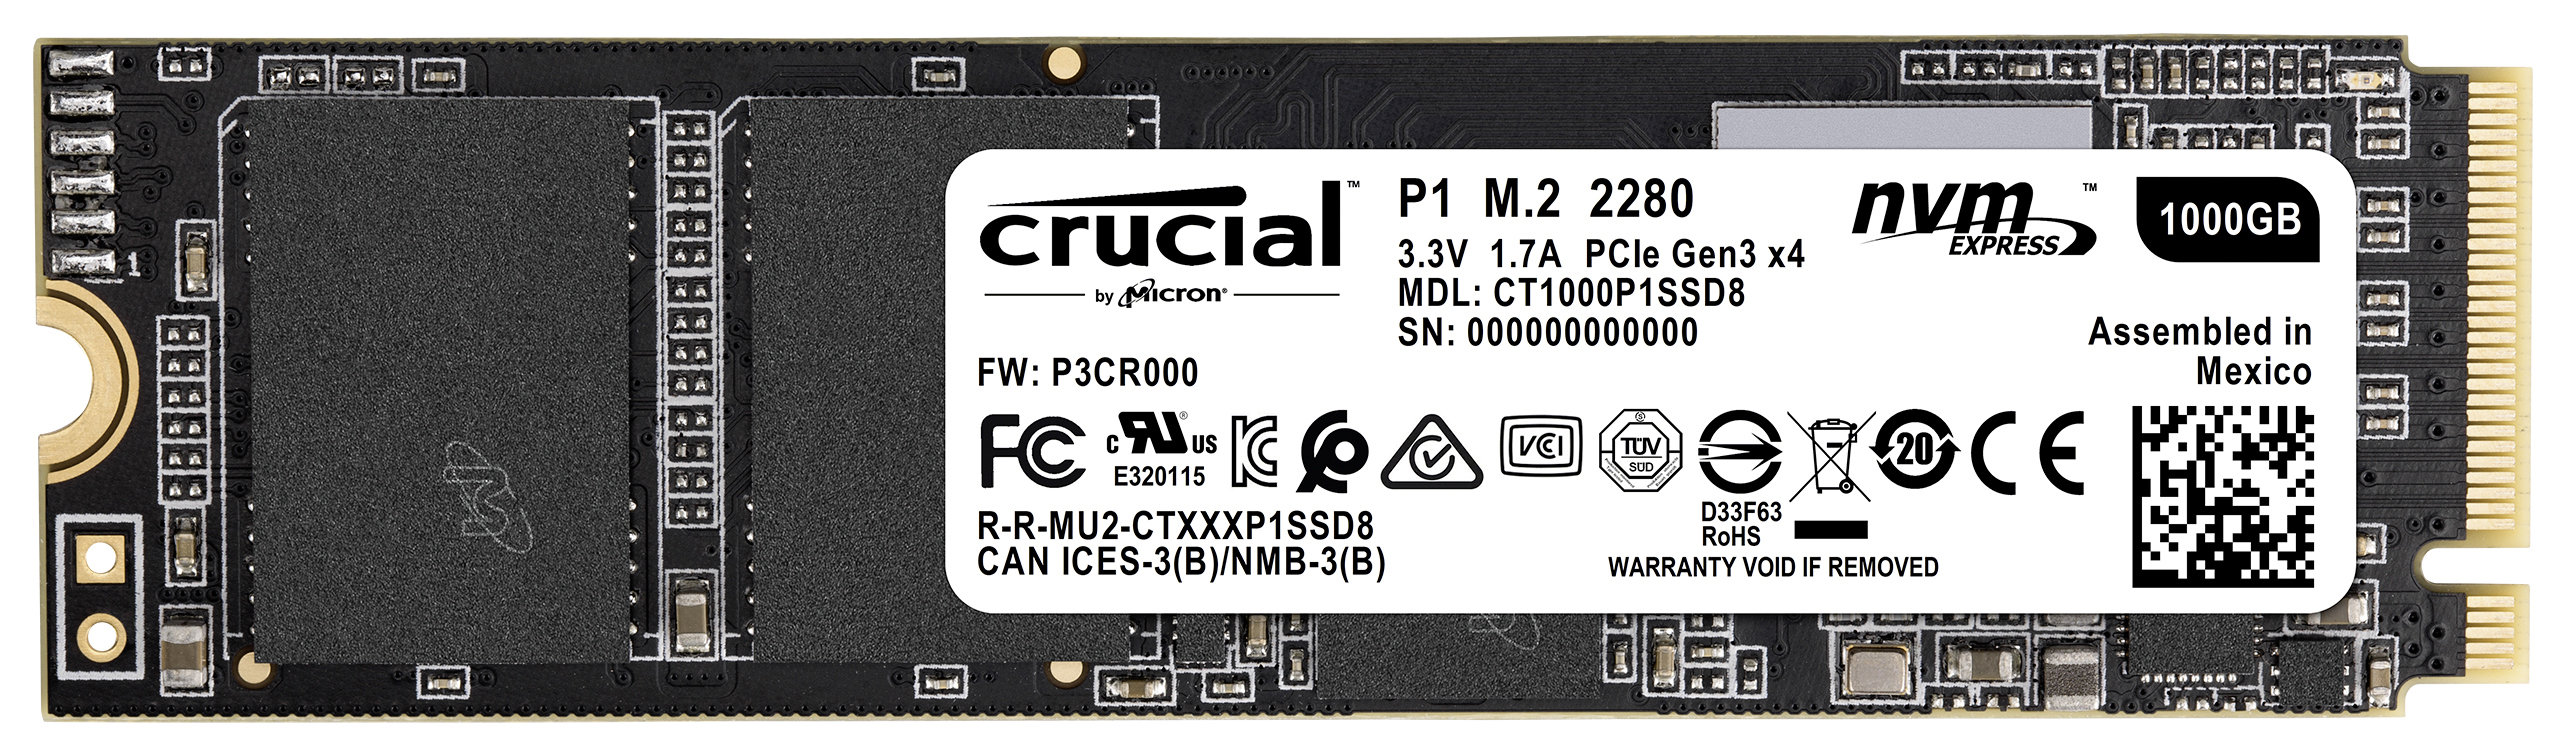 CT1000P1SSD8 TB via SSD 1 Festplatte, CRUCIAL intern M.2 PCIe,